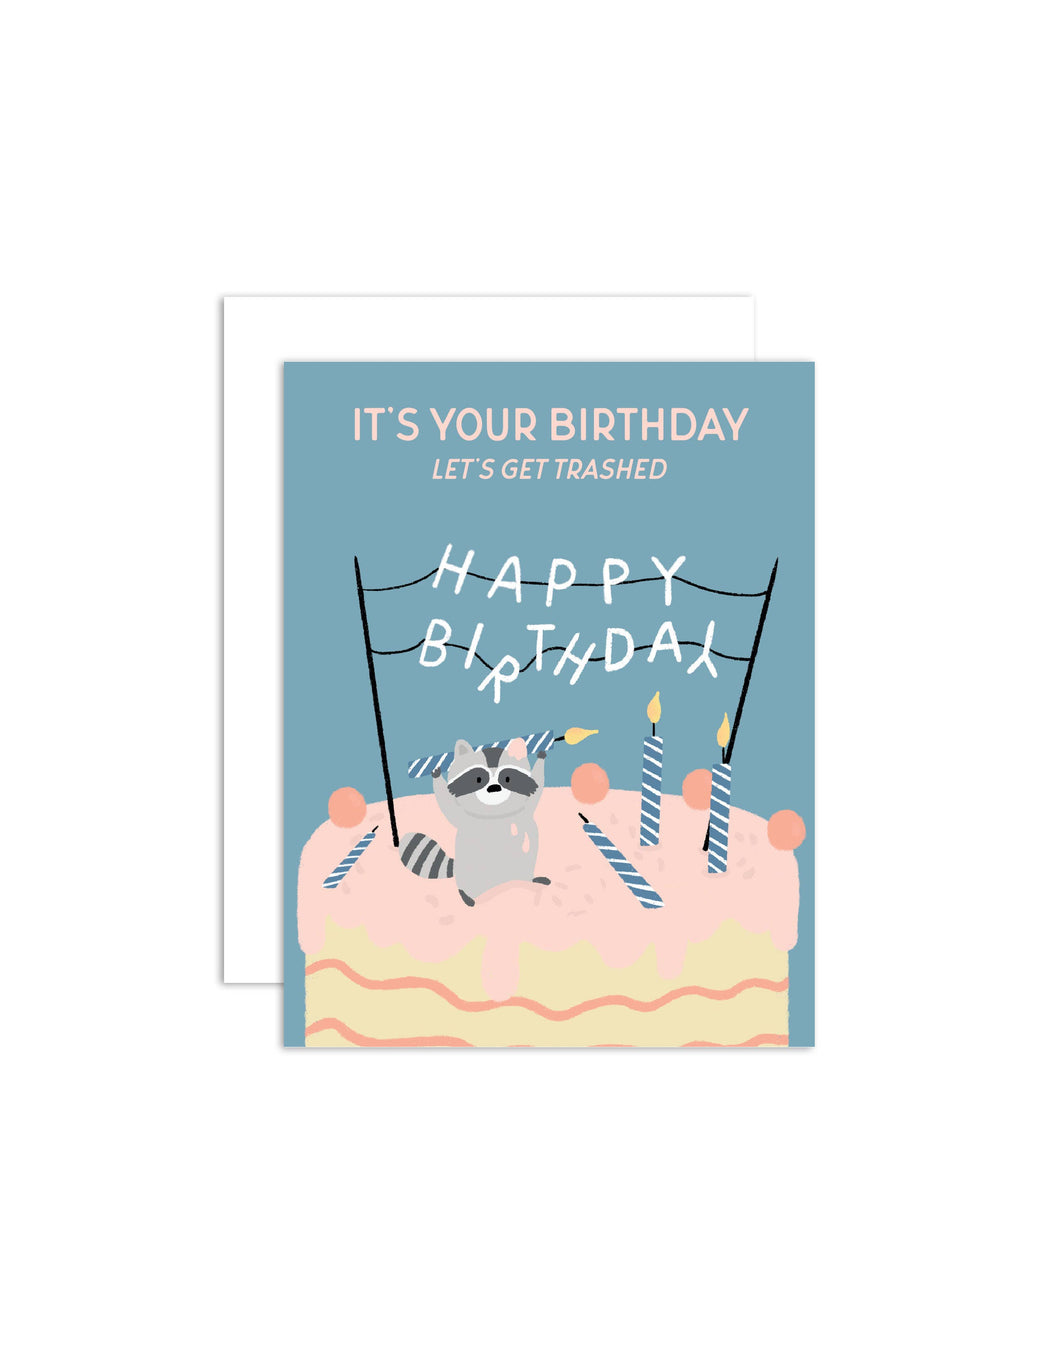 Trashed Raccoon Birthday - Birthday Greeting Card